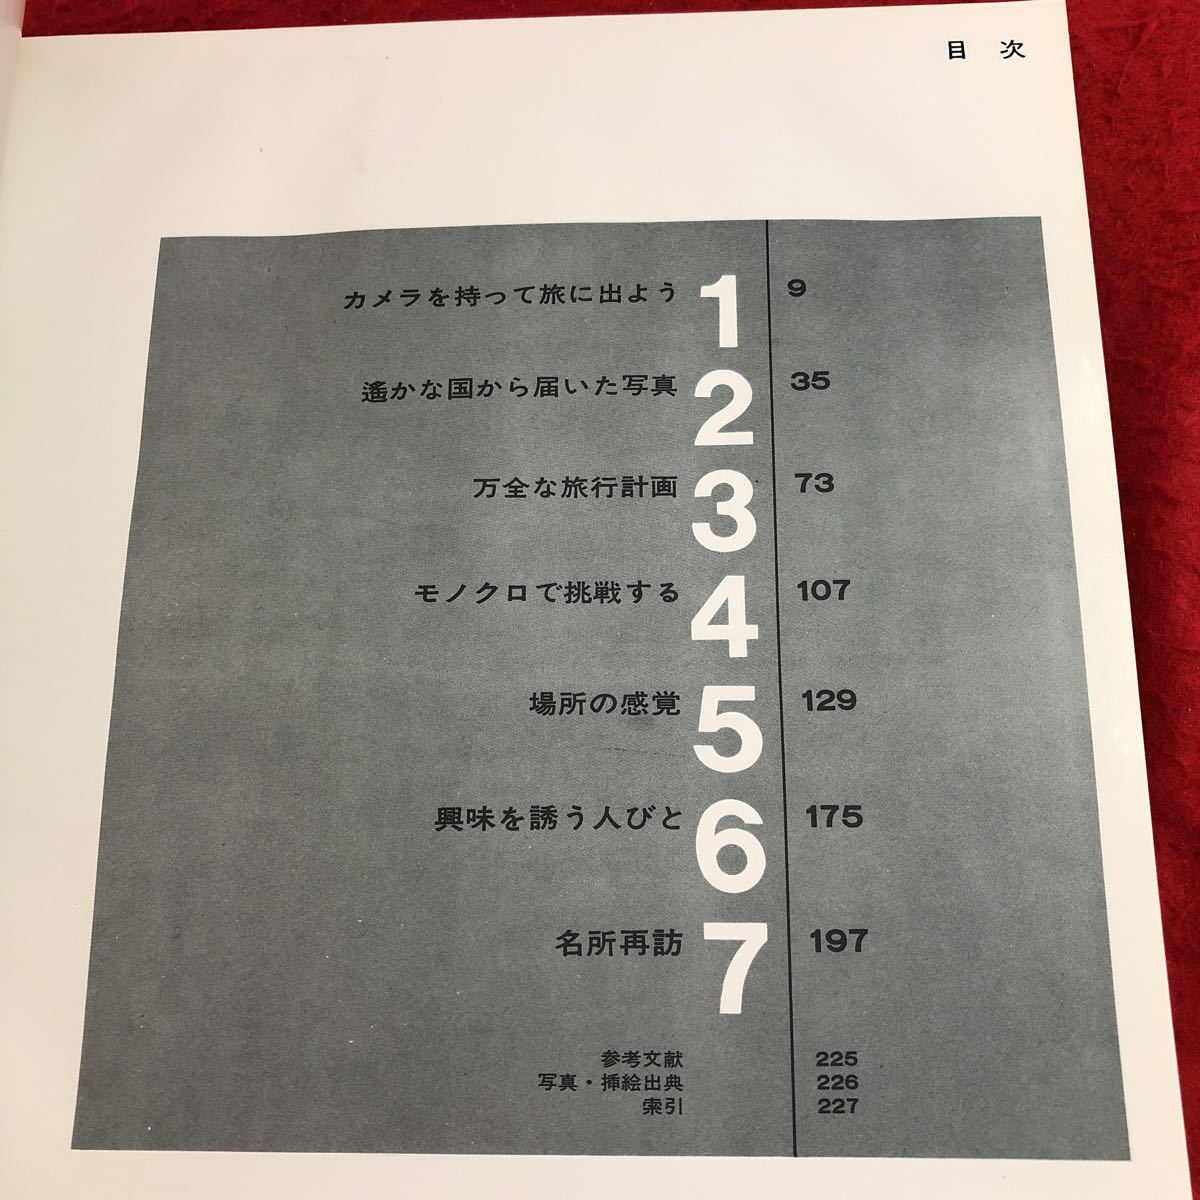 S6c-284 旅行と写真 日本語版 ライフ写真講座 1973年 発行 タイムライフブックス 写真 撮影 旅行 風景 技術 芸術 専門誌 モノクロ 色彩_画像3